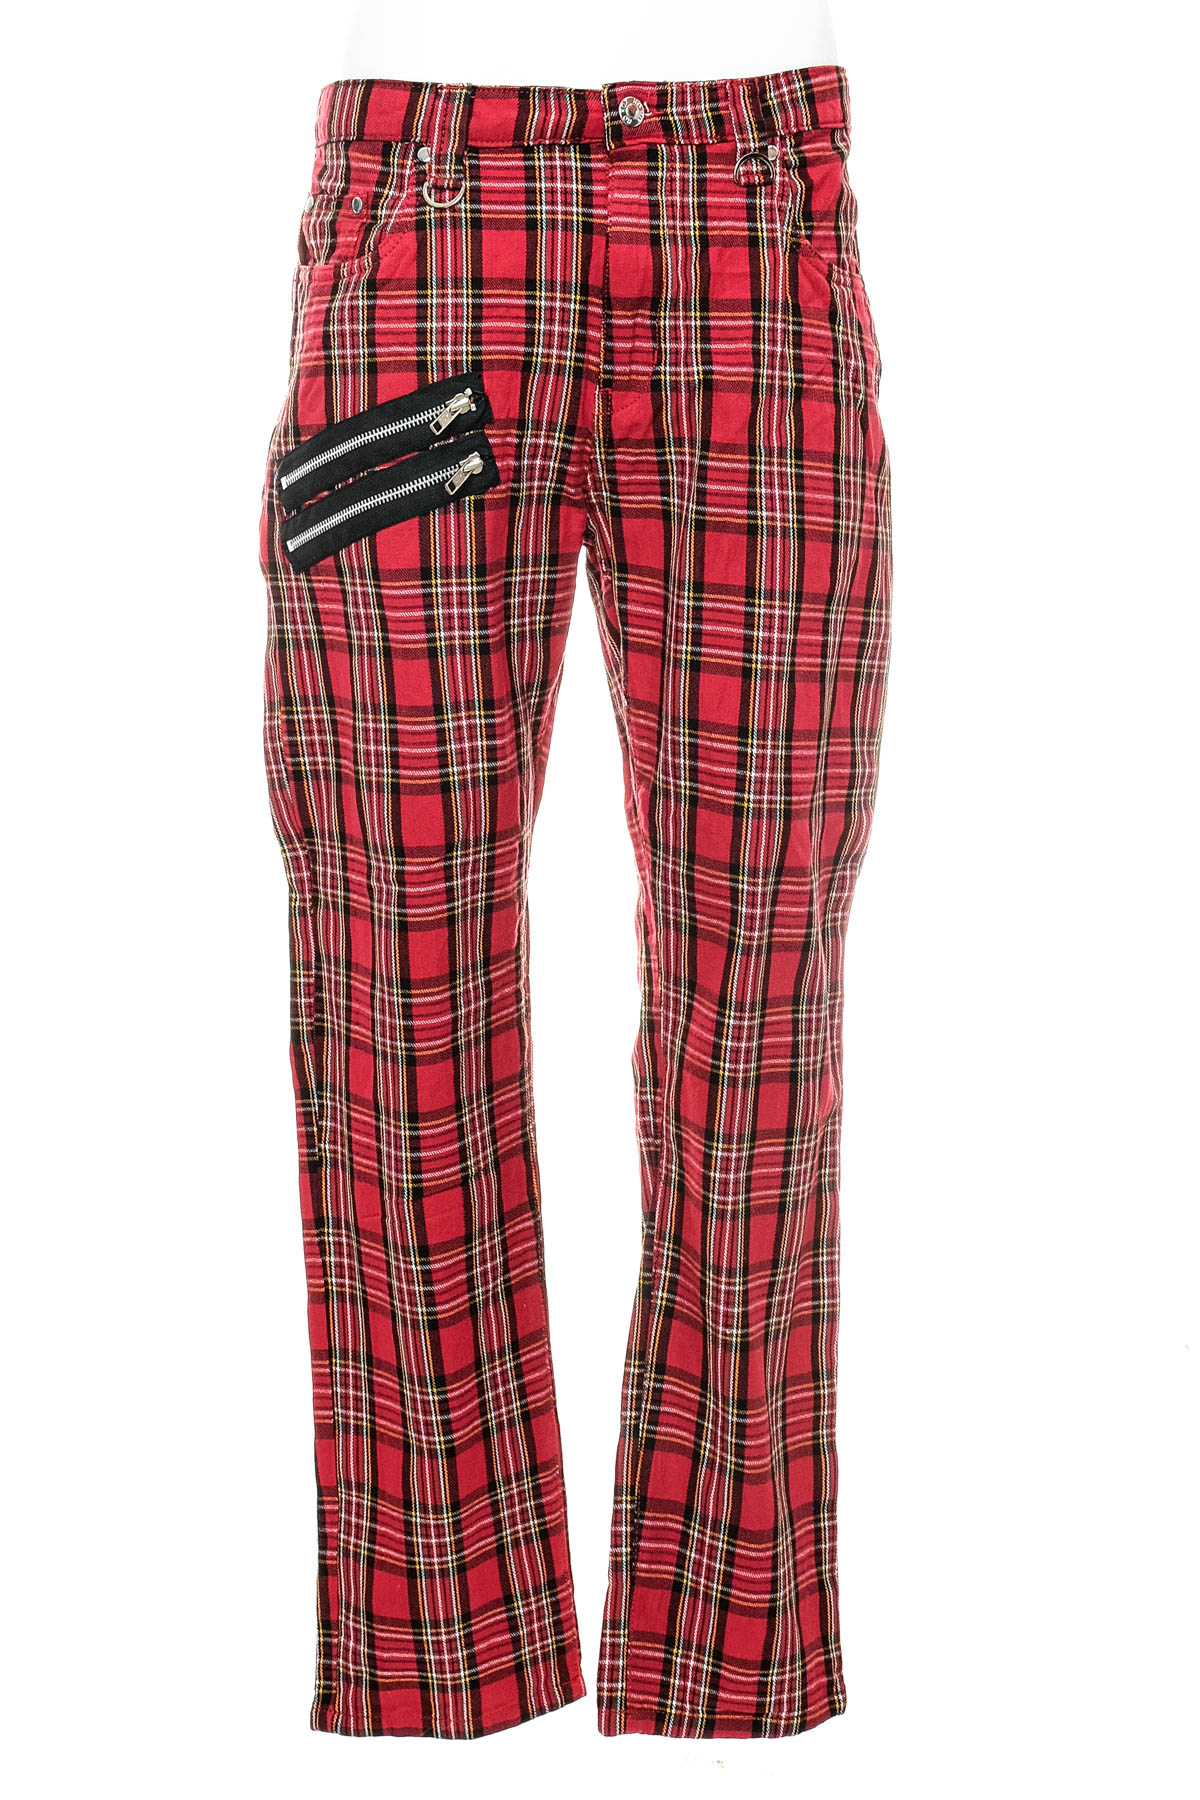 Pantalon pentru bărbați - Ro Rox - 0